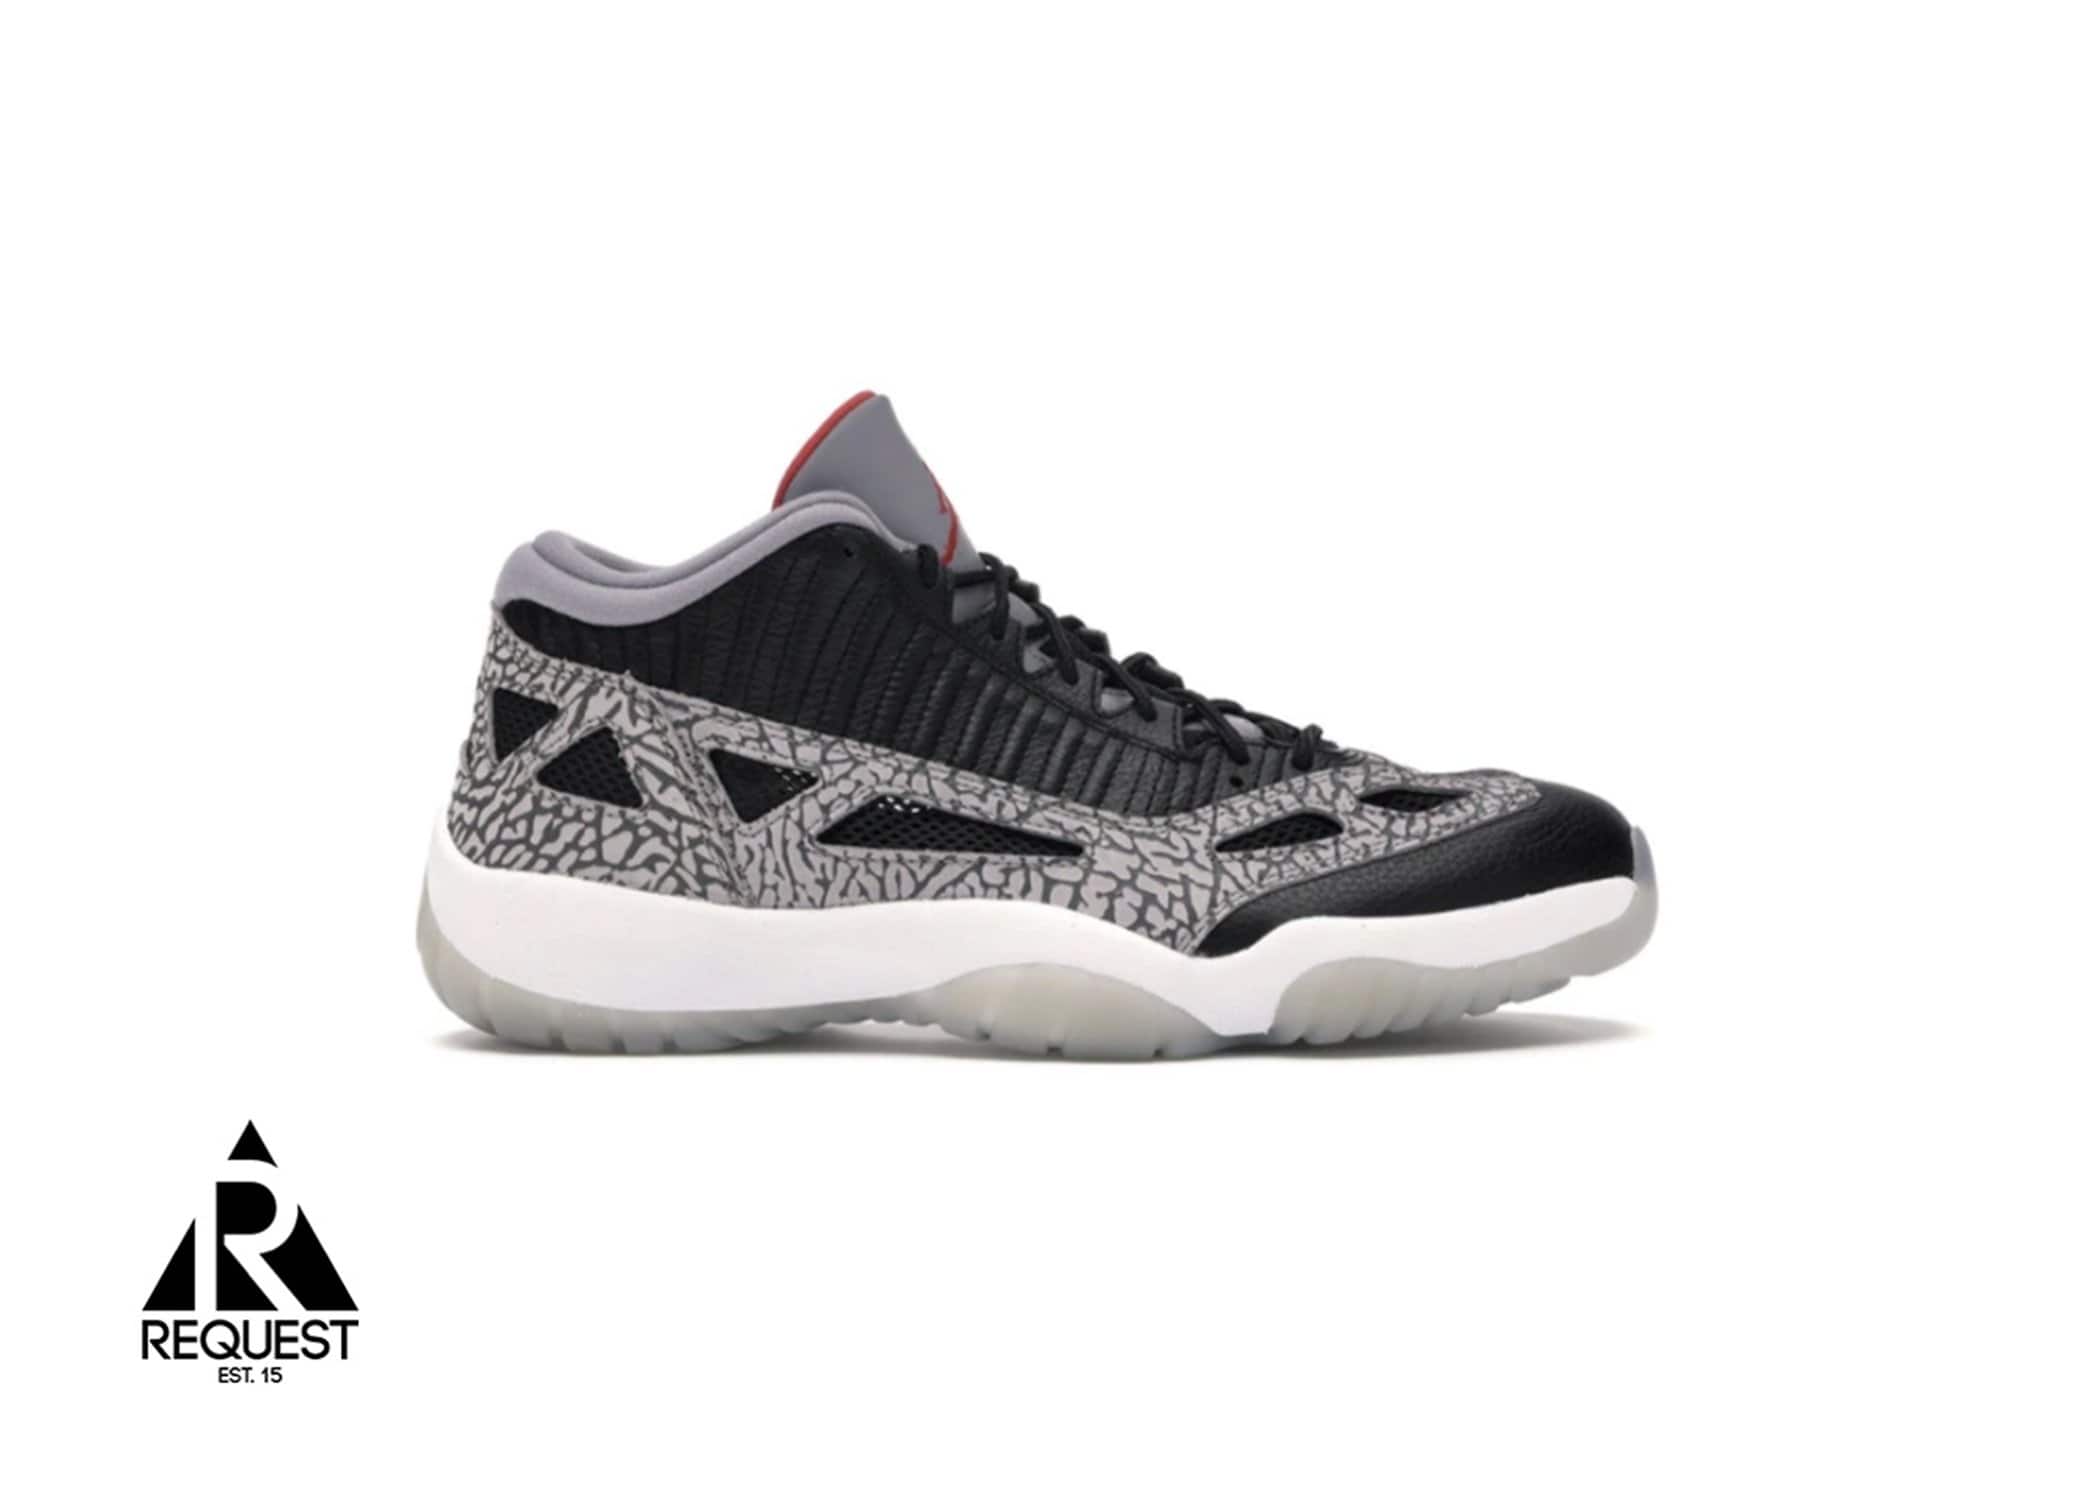 Air Jordan 11 Retro Low IE “Black Cement”